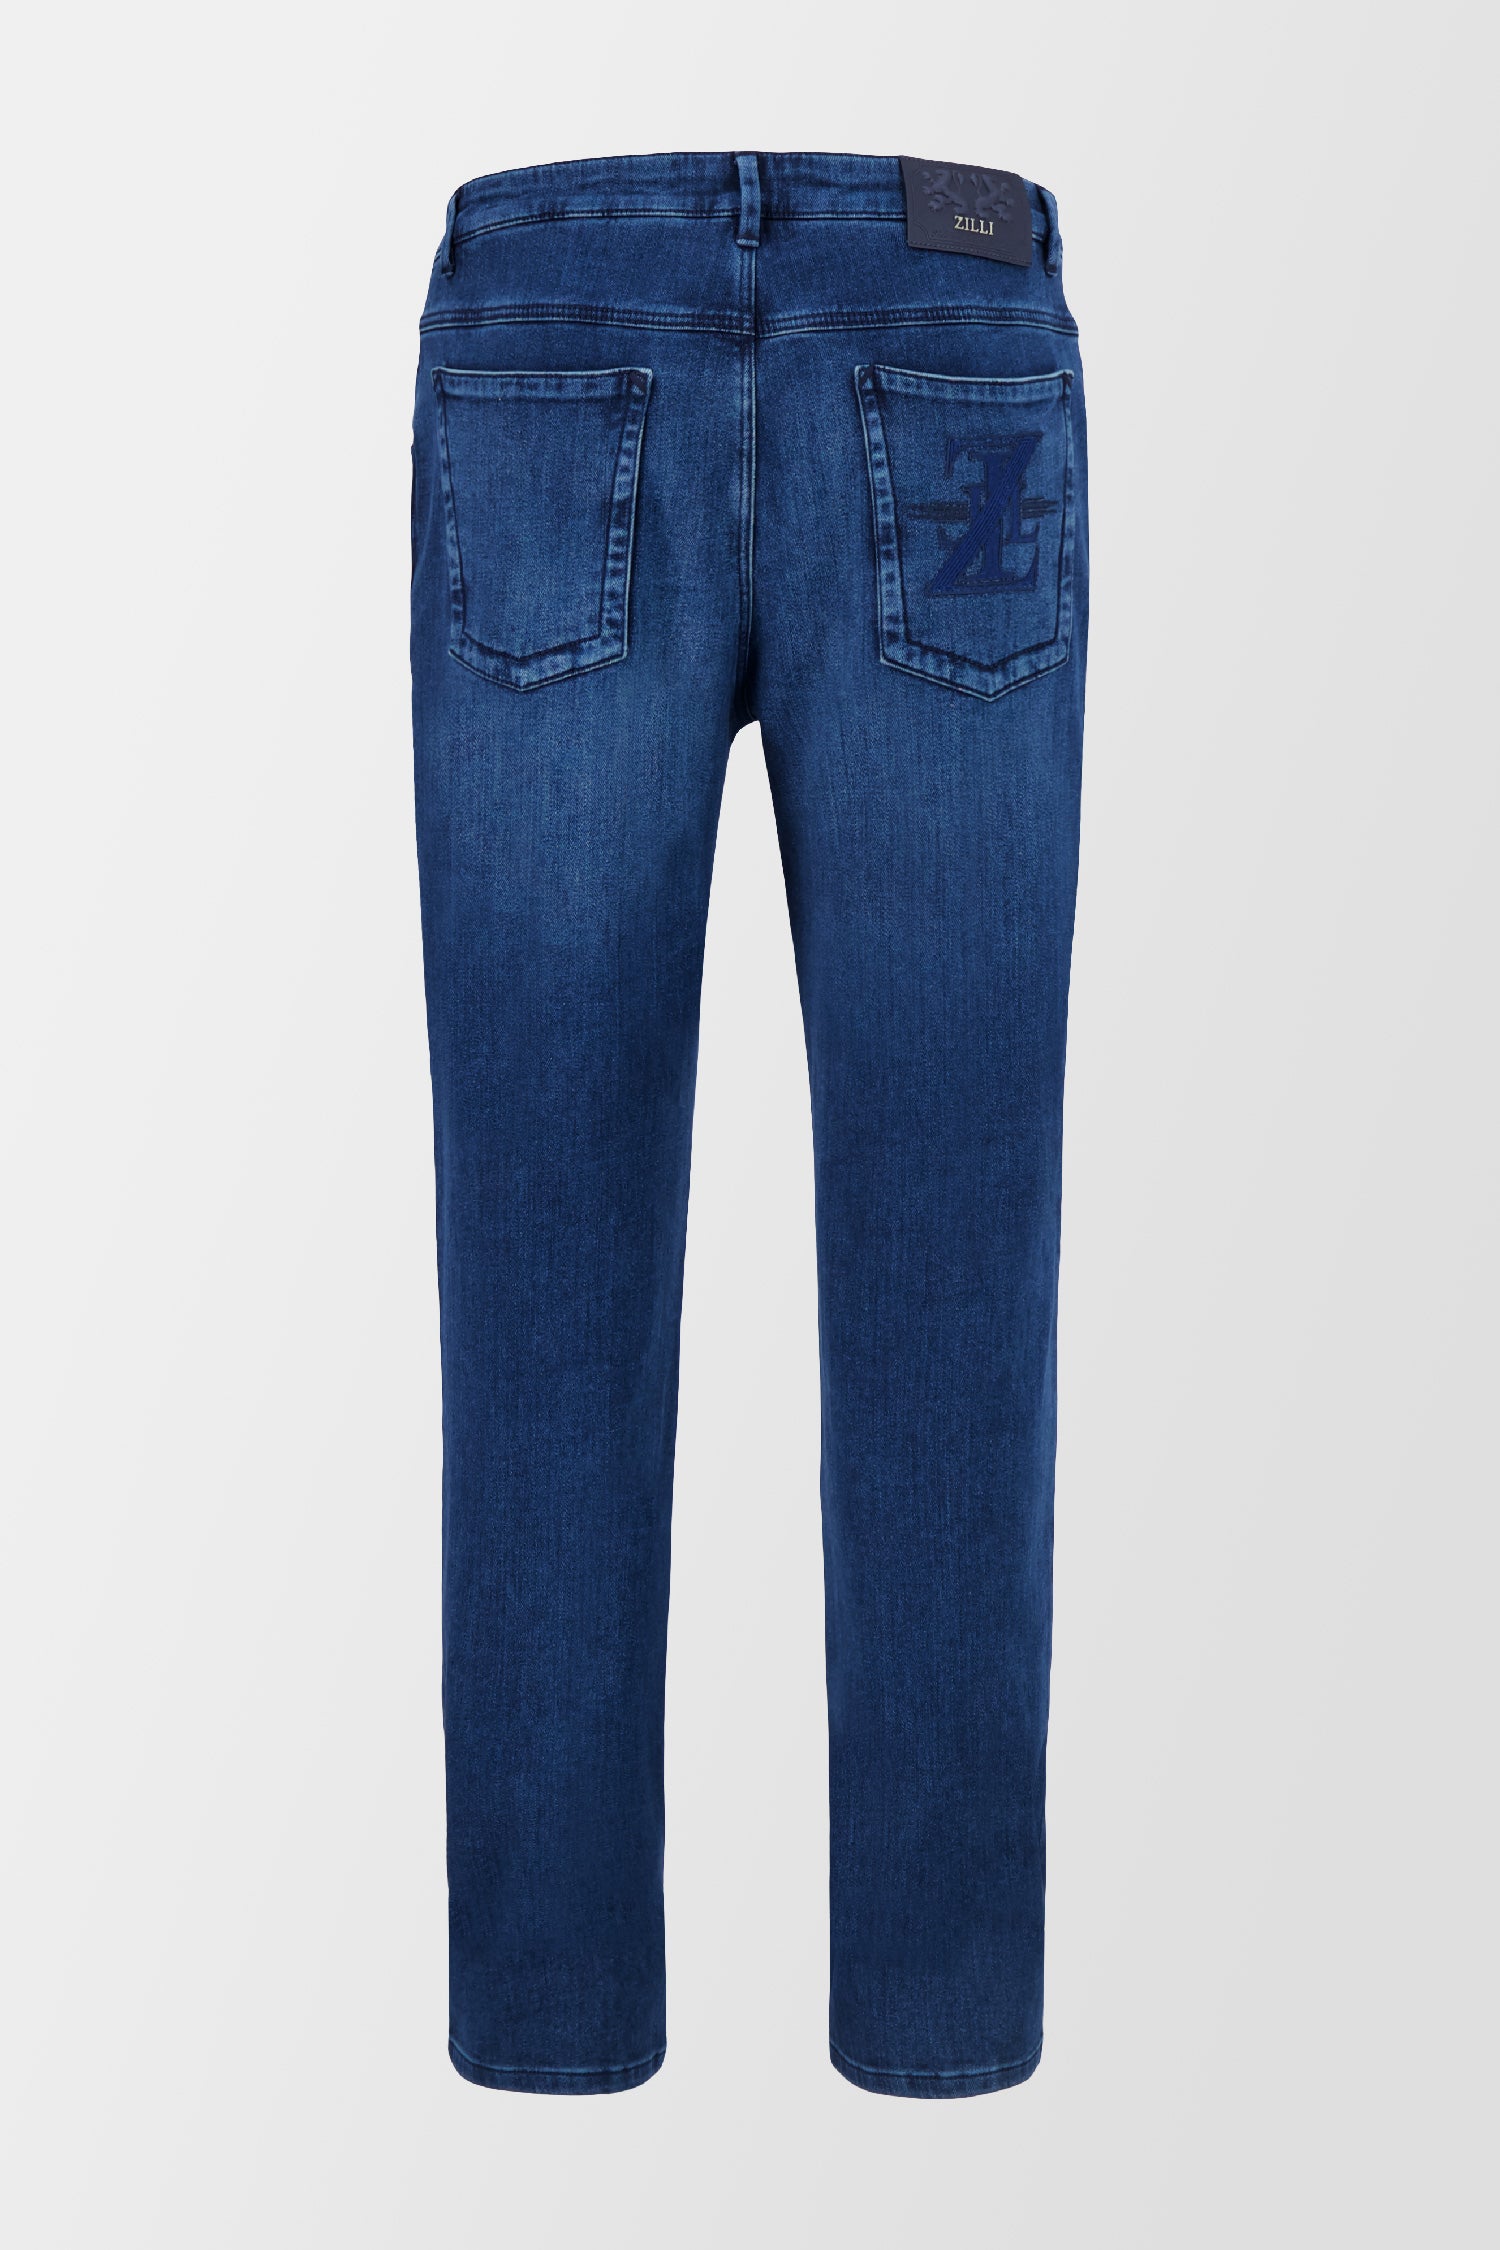 Zilli Blue Classic Jeans